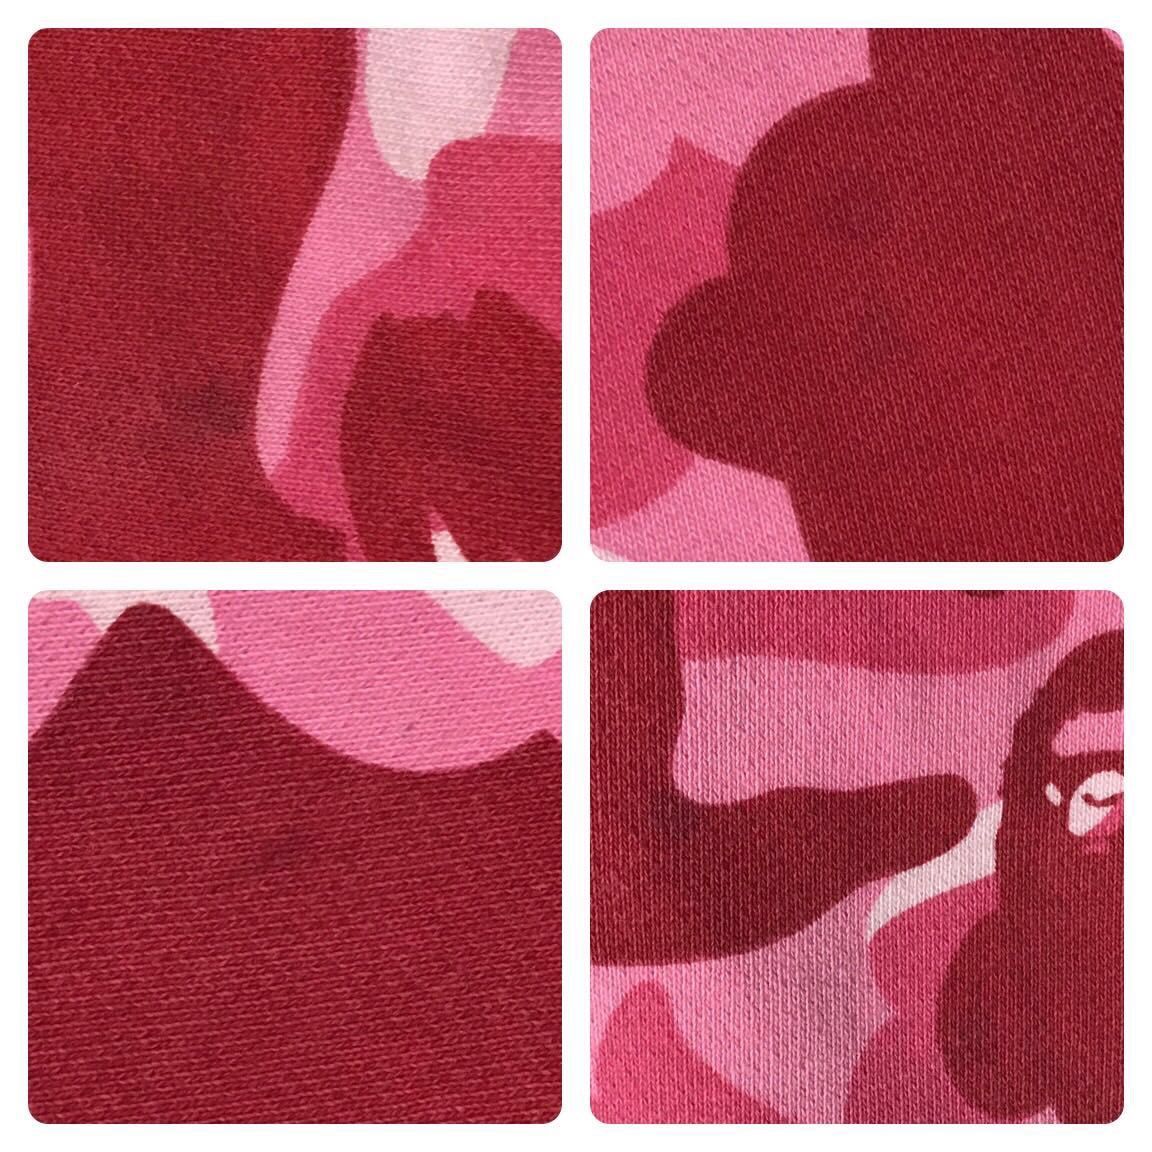 Bape Pink Swarovski BAPE LOGO full zip hoodie Pink camo APE NIGO Size US L / EU 52-54 / 3 - 8 Thumbnail